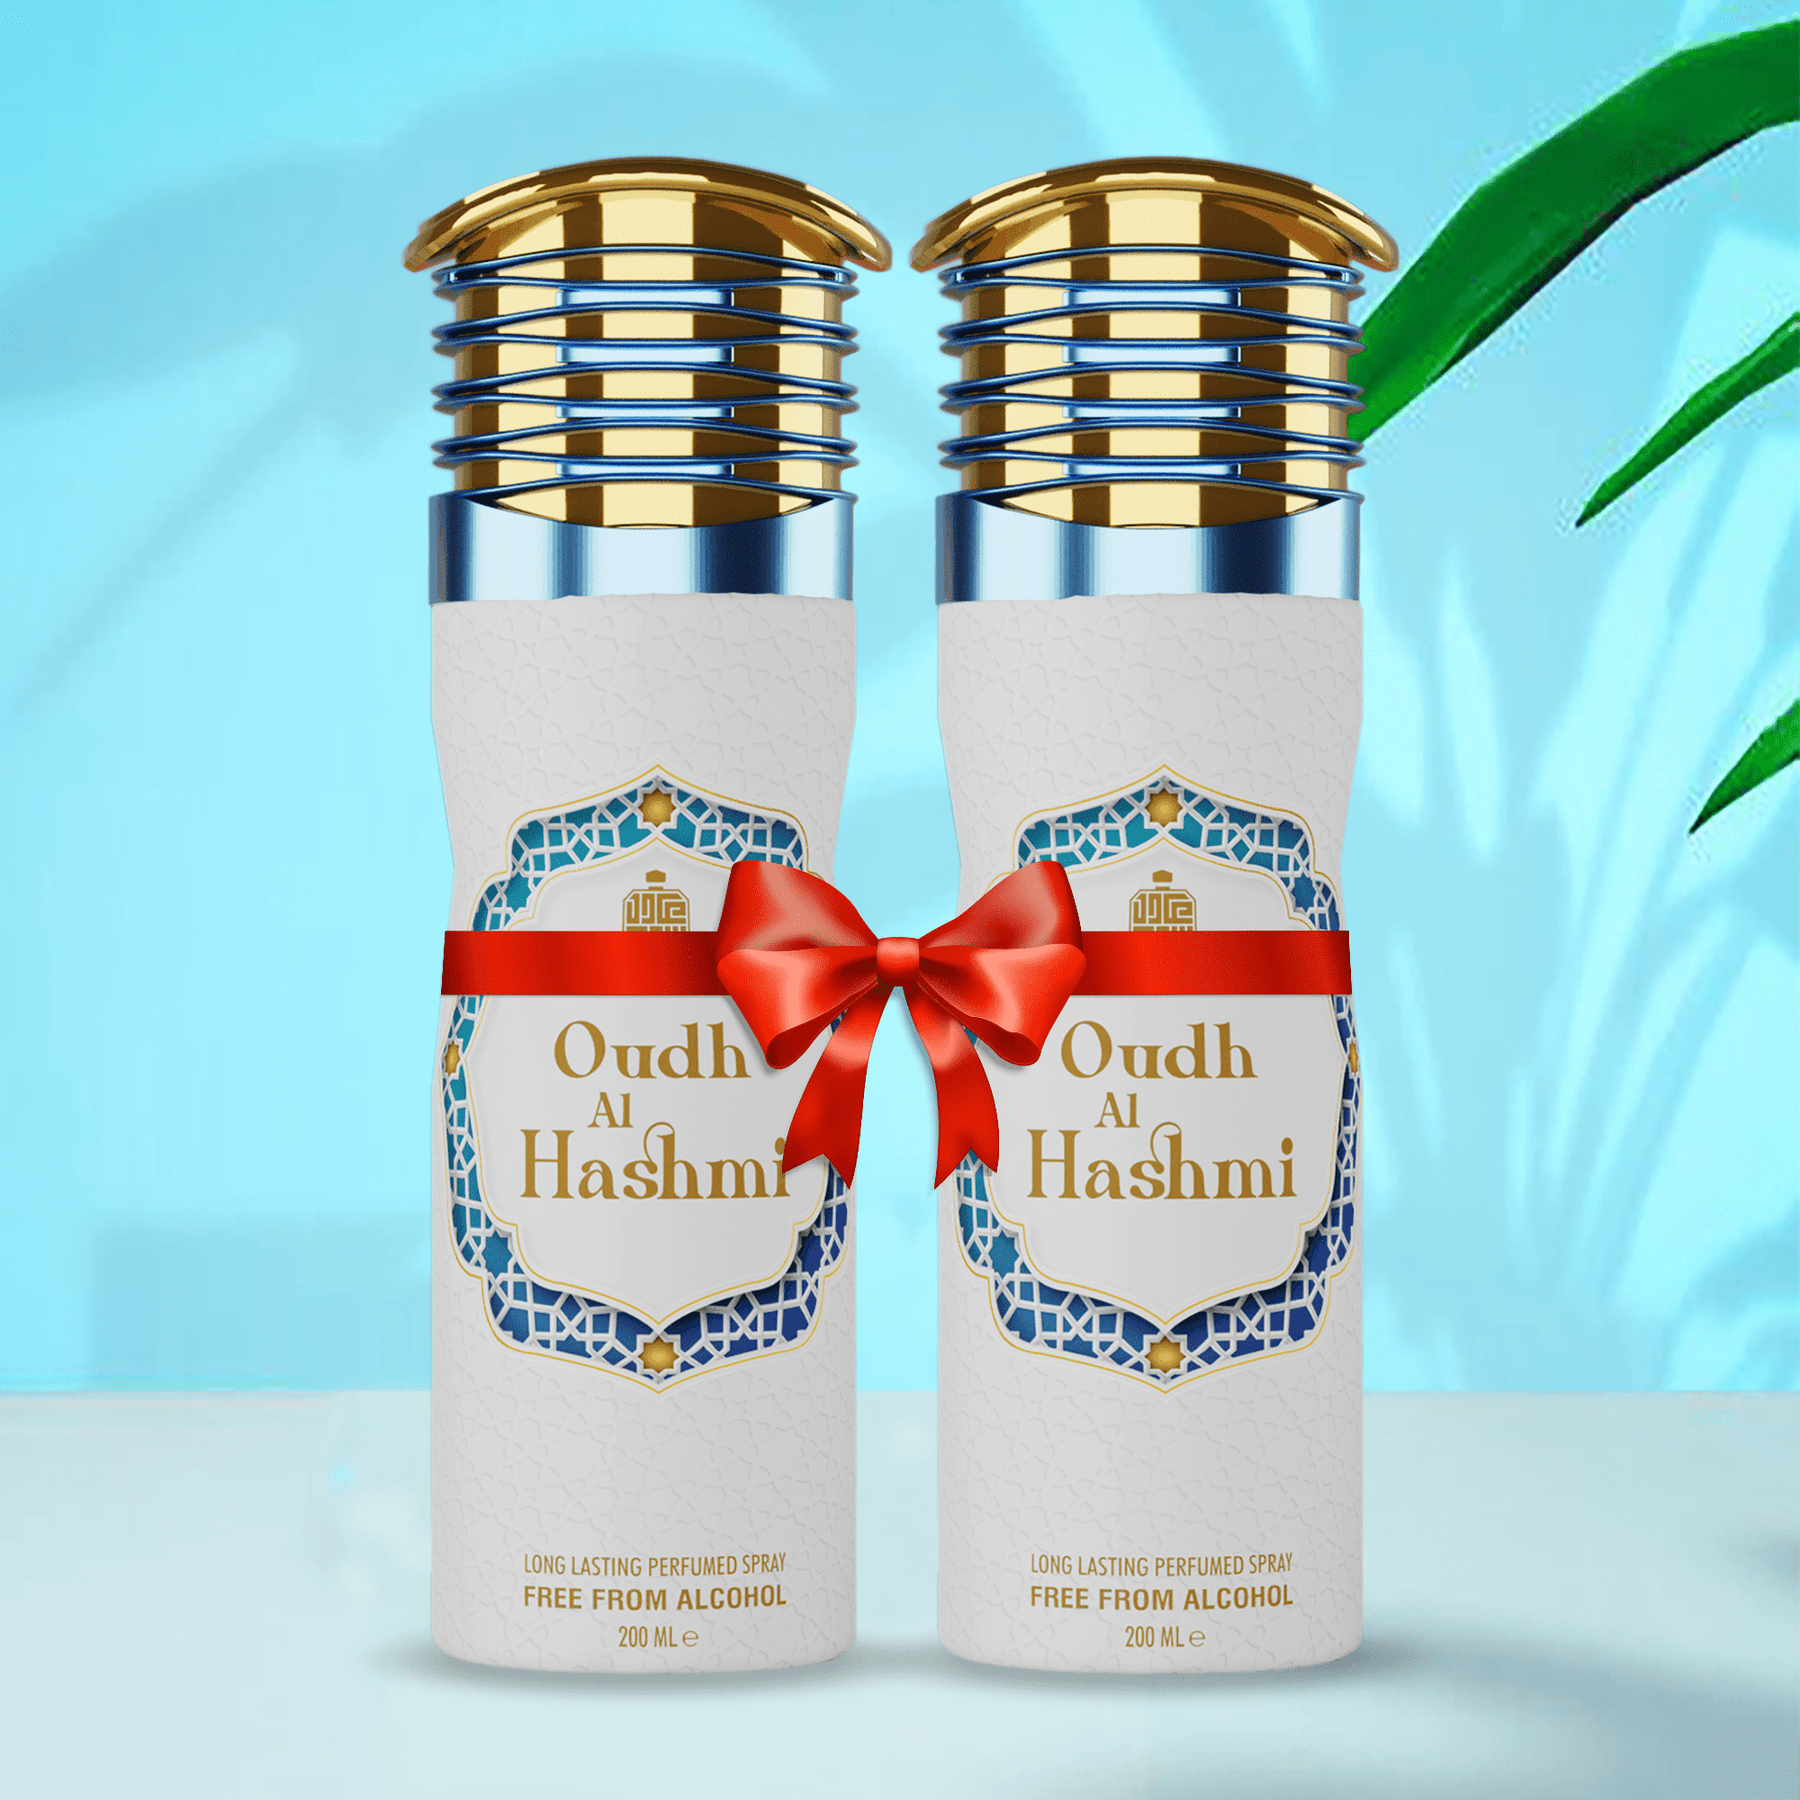 Oudh Al Hashmi Alcohol Free Premium Deodorant Body spray 200 ML pack of 2 Body spray